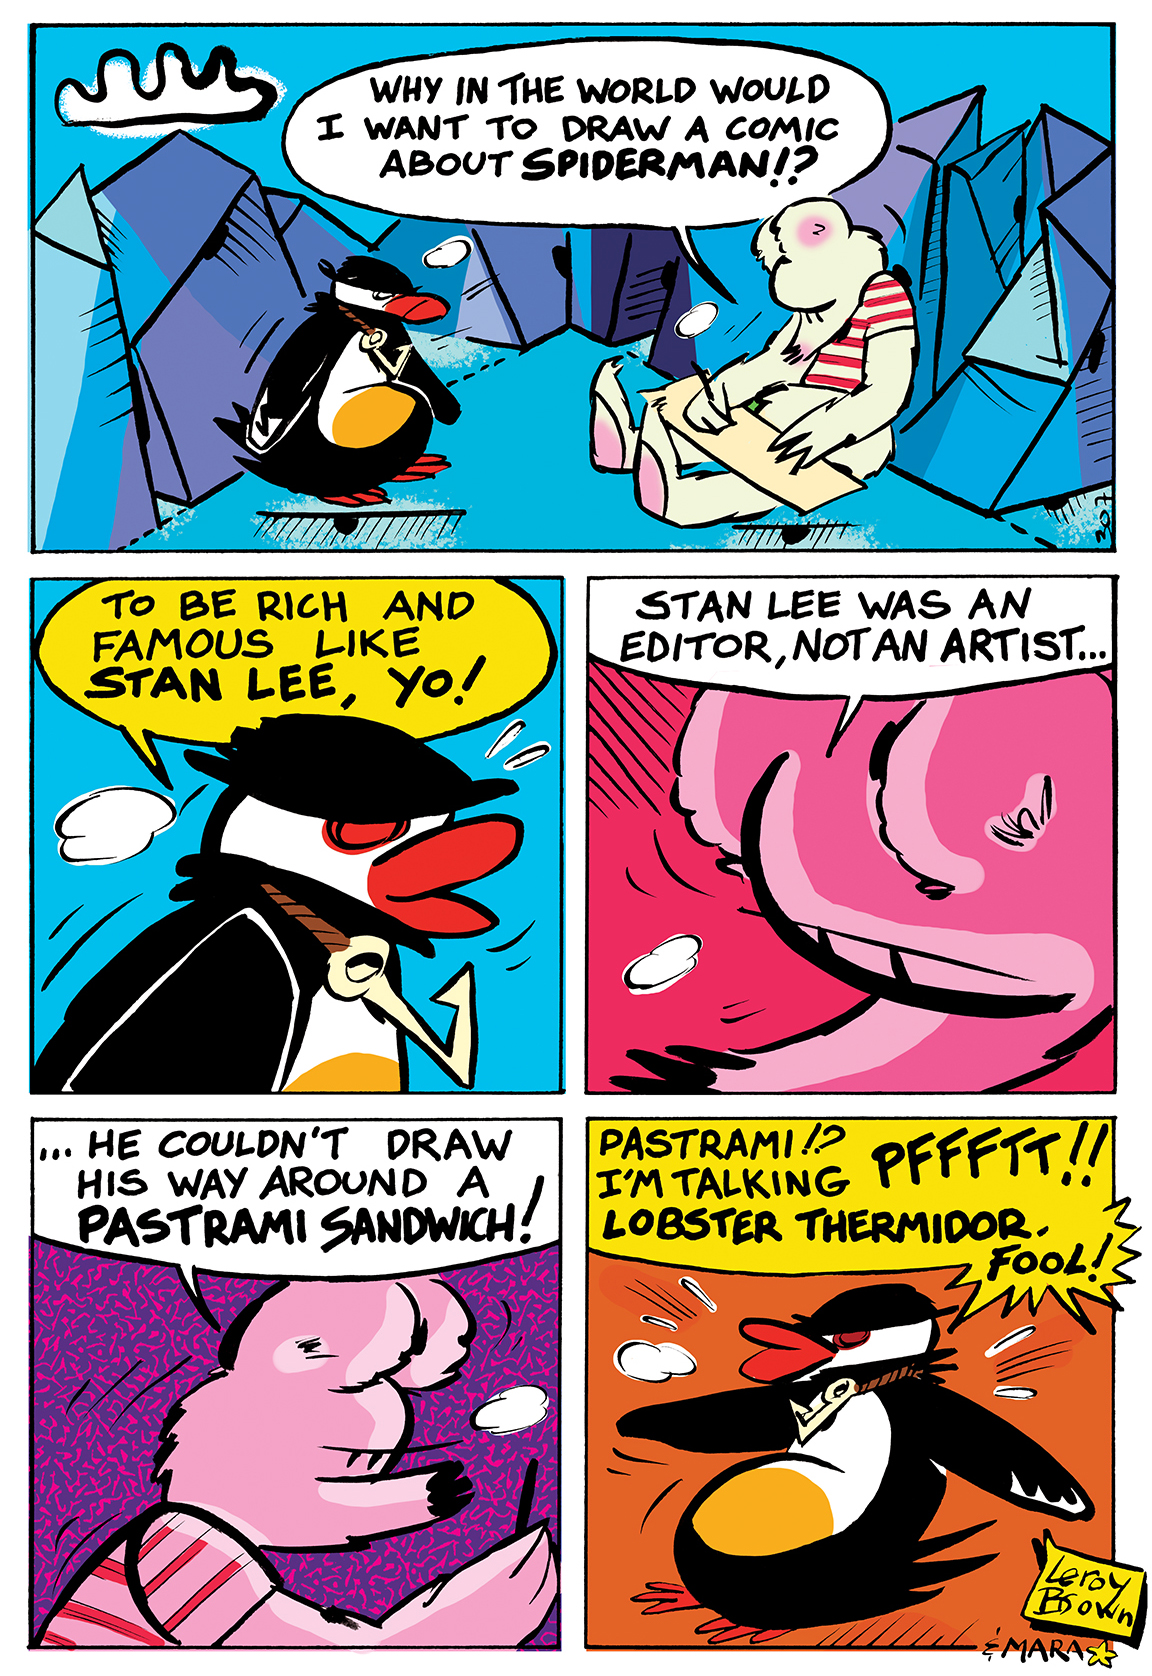 ICECUBES the comic strip #307